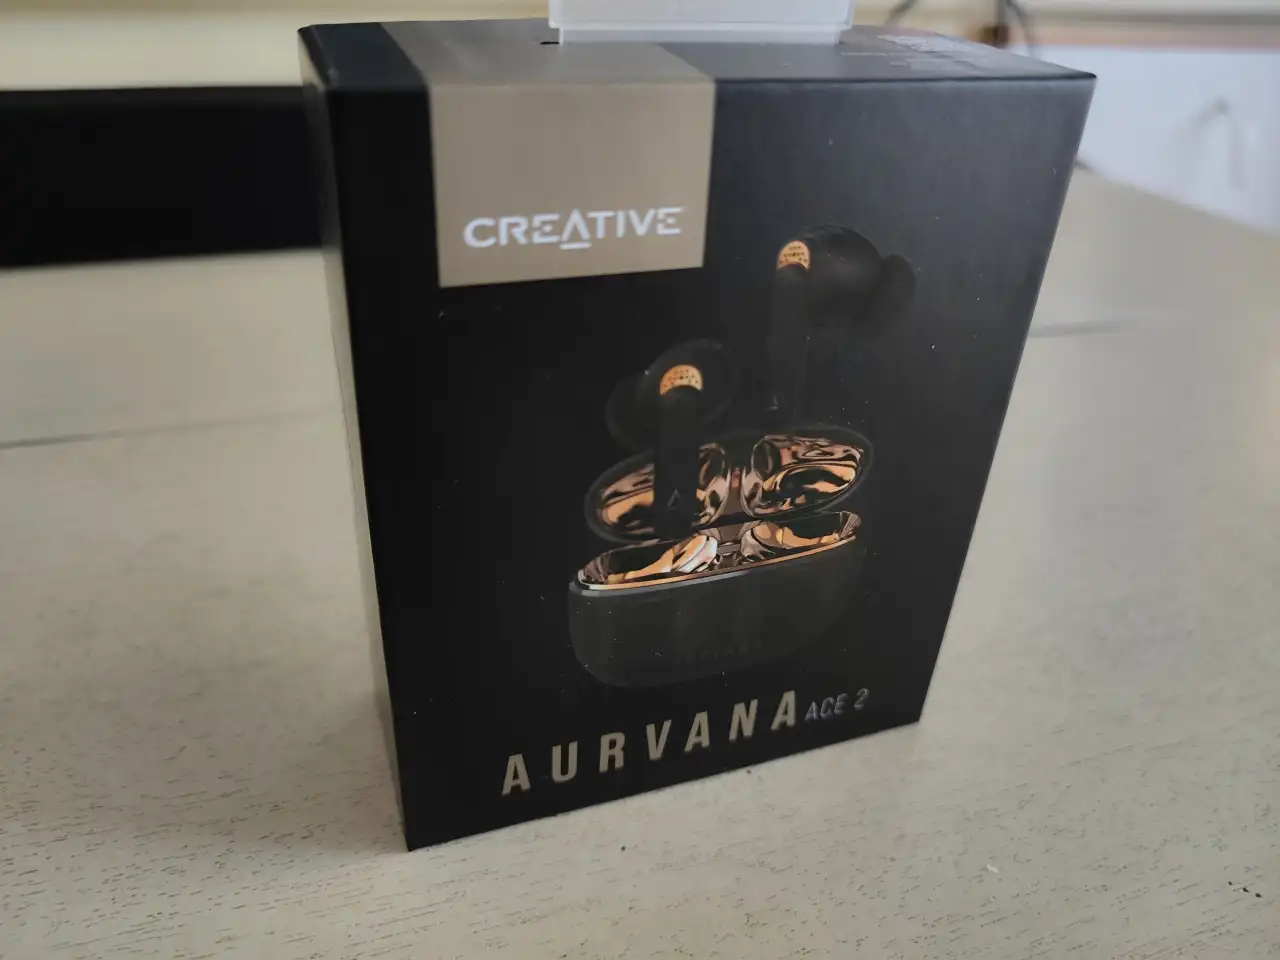 Creative Aurvana Ace 2 - rivoluzione MEMS e aptX Lossless per una qualità audio senza compromessi